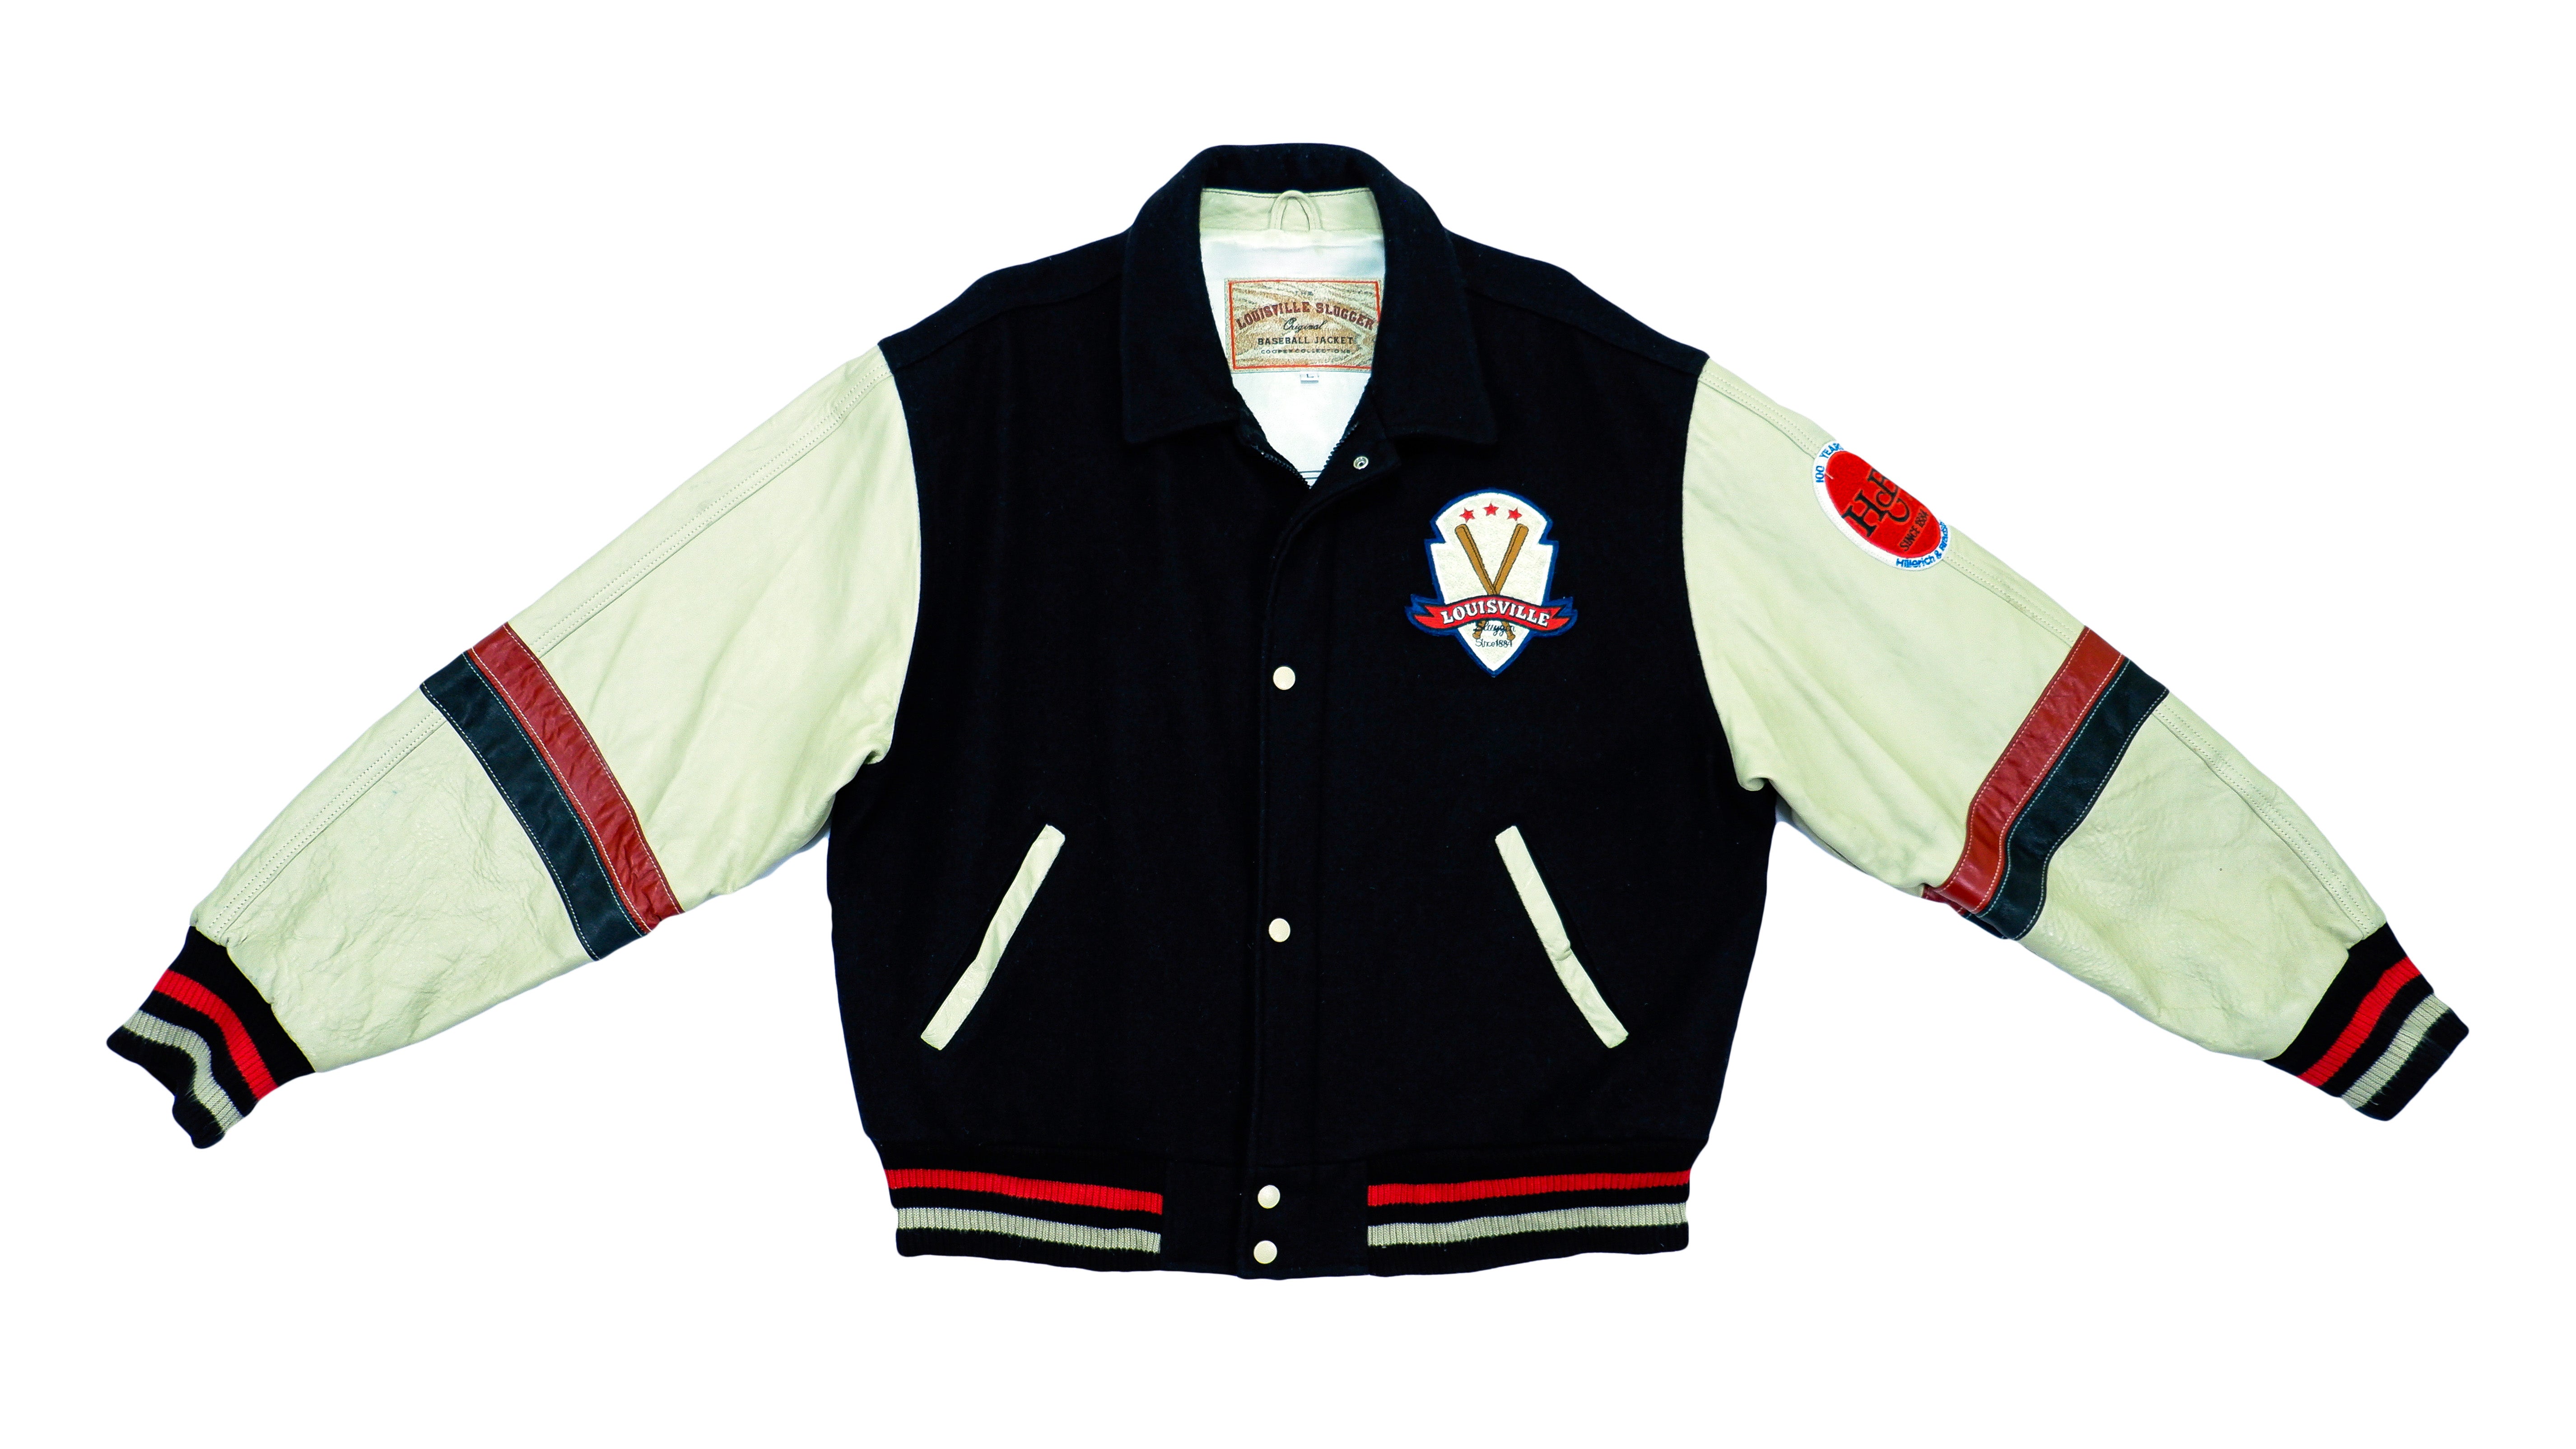 Louisville Slugger, Jackets & Coats